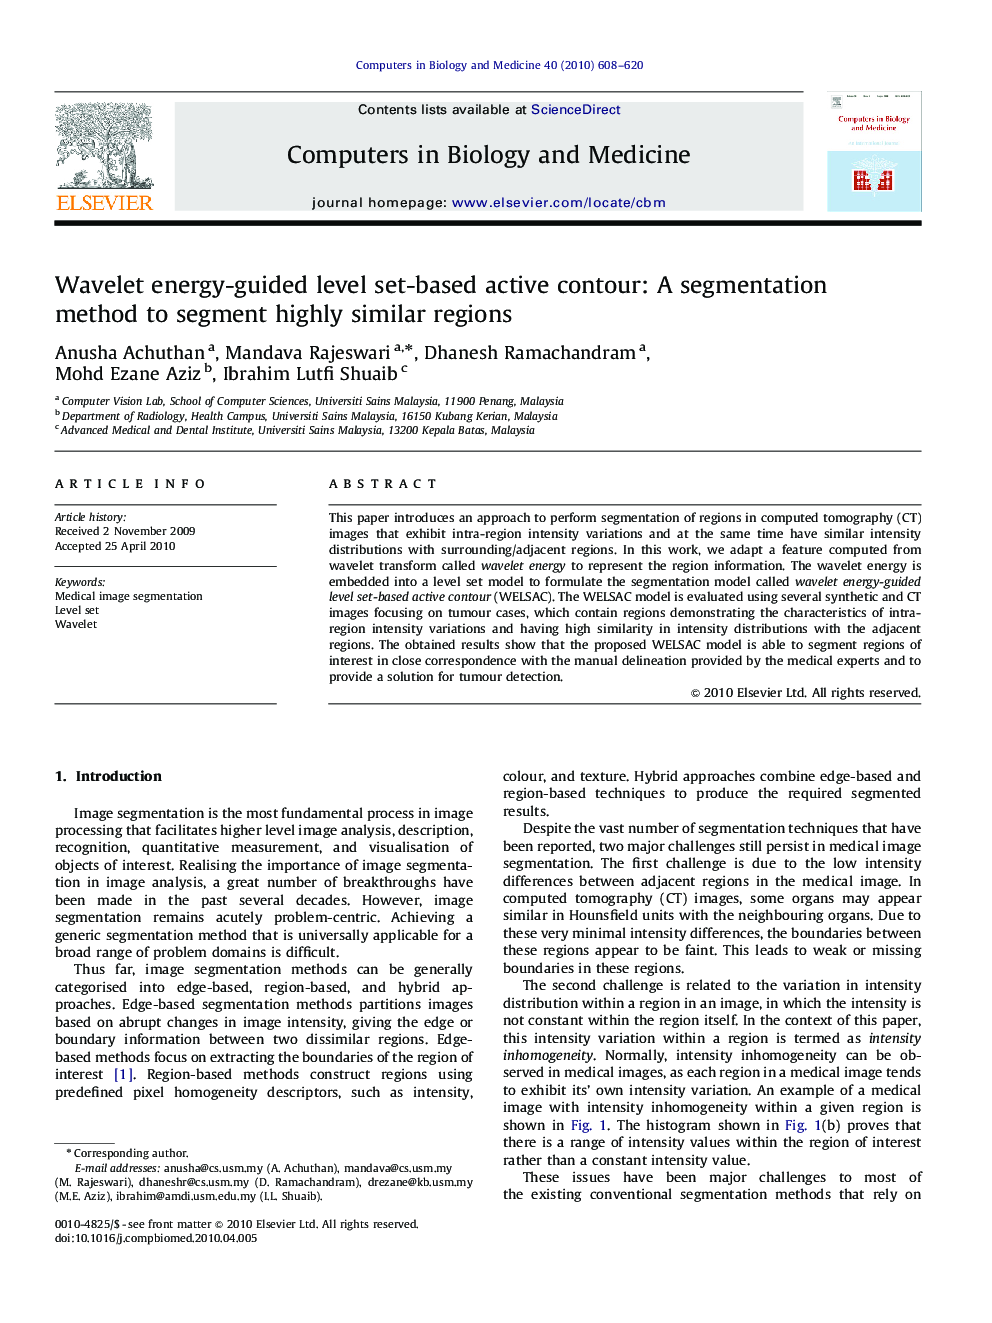 Wavelet energy-guided level set-based active contour: A segmentation method to segment highly similar regions